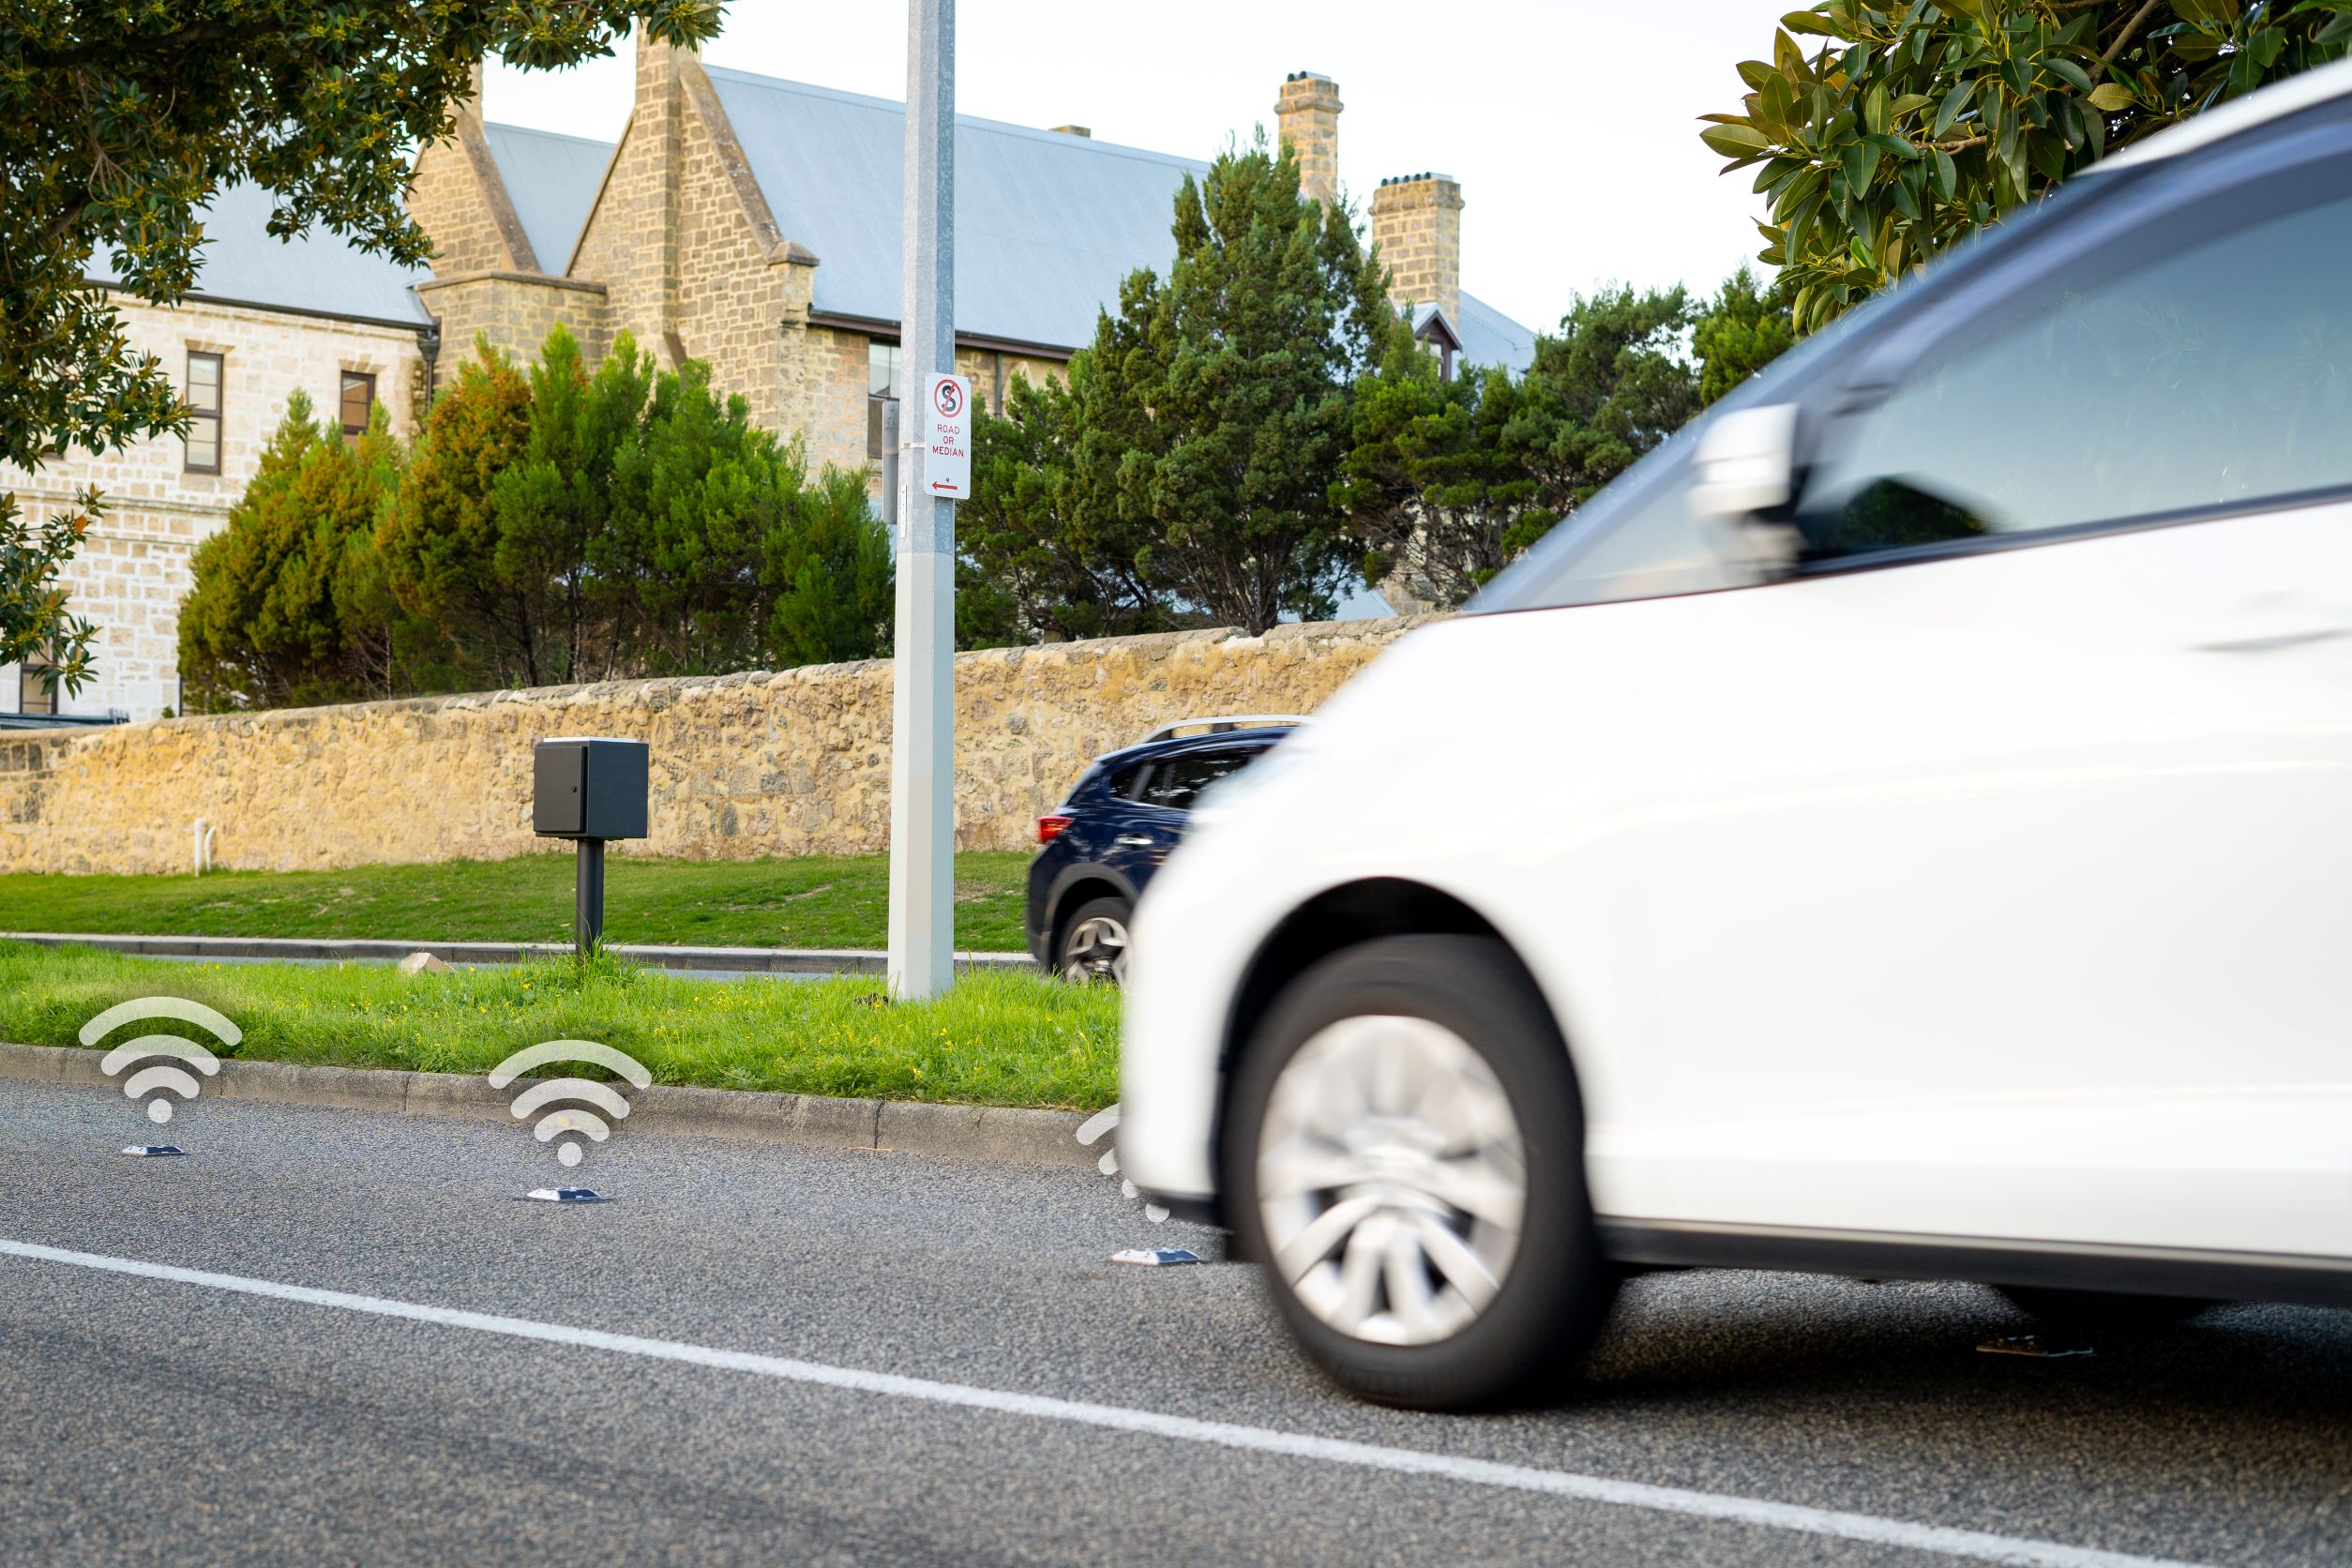 RoadPod VM sensors on the road sending real-time traffic data to ATLYST